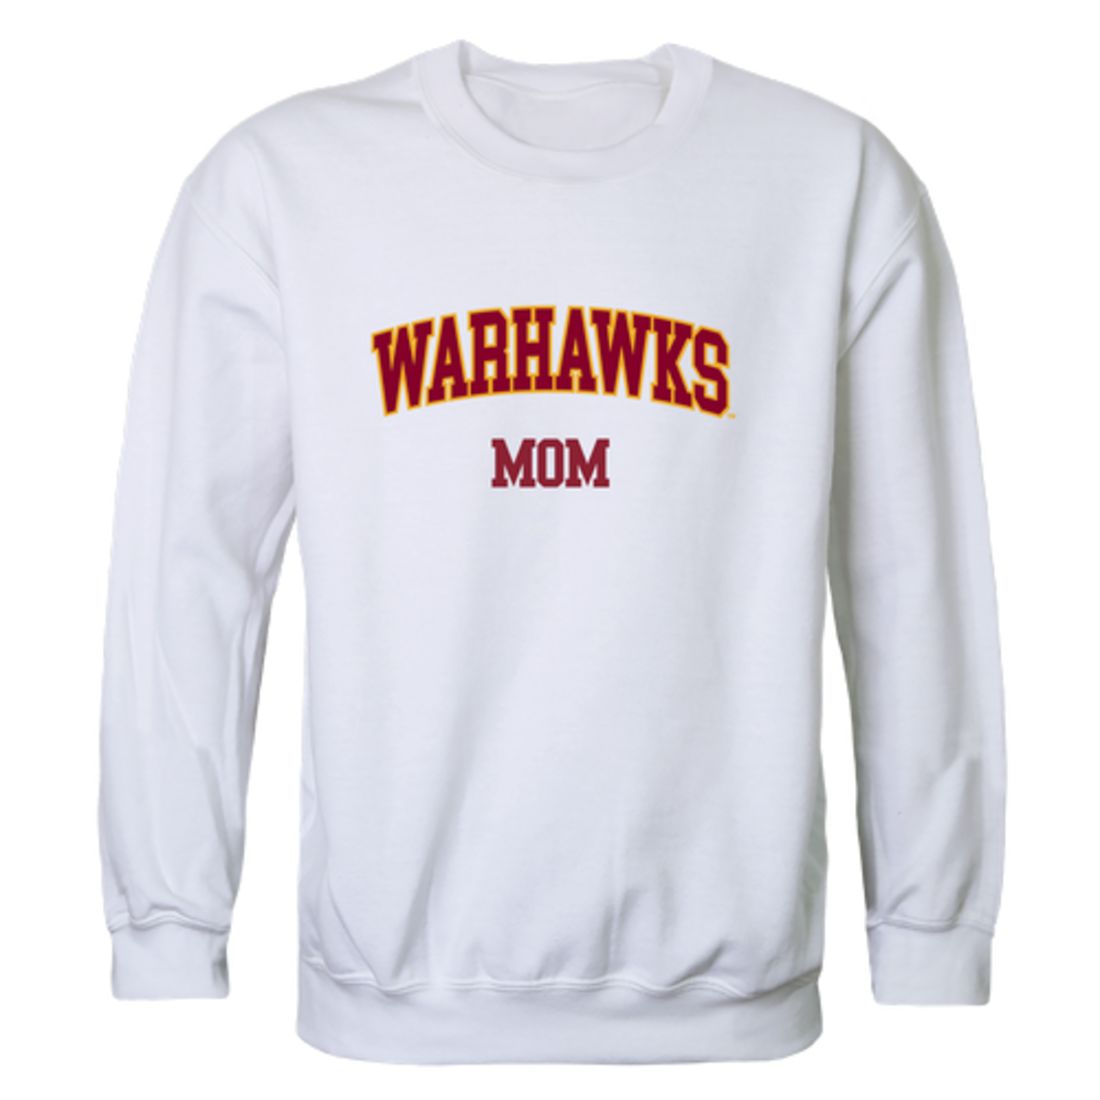 ULM University of Louisiana Monroe Warhawks Mom Fleece Crewneck Pullover Sweatshirt Heather Grey Small-Campus-Wardrobe